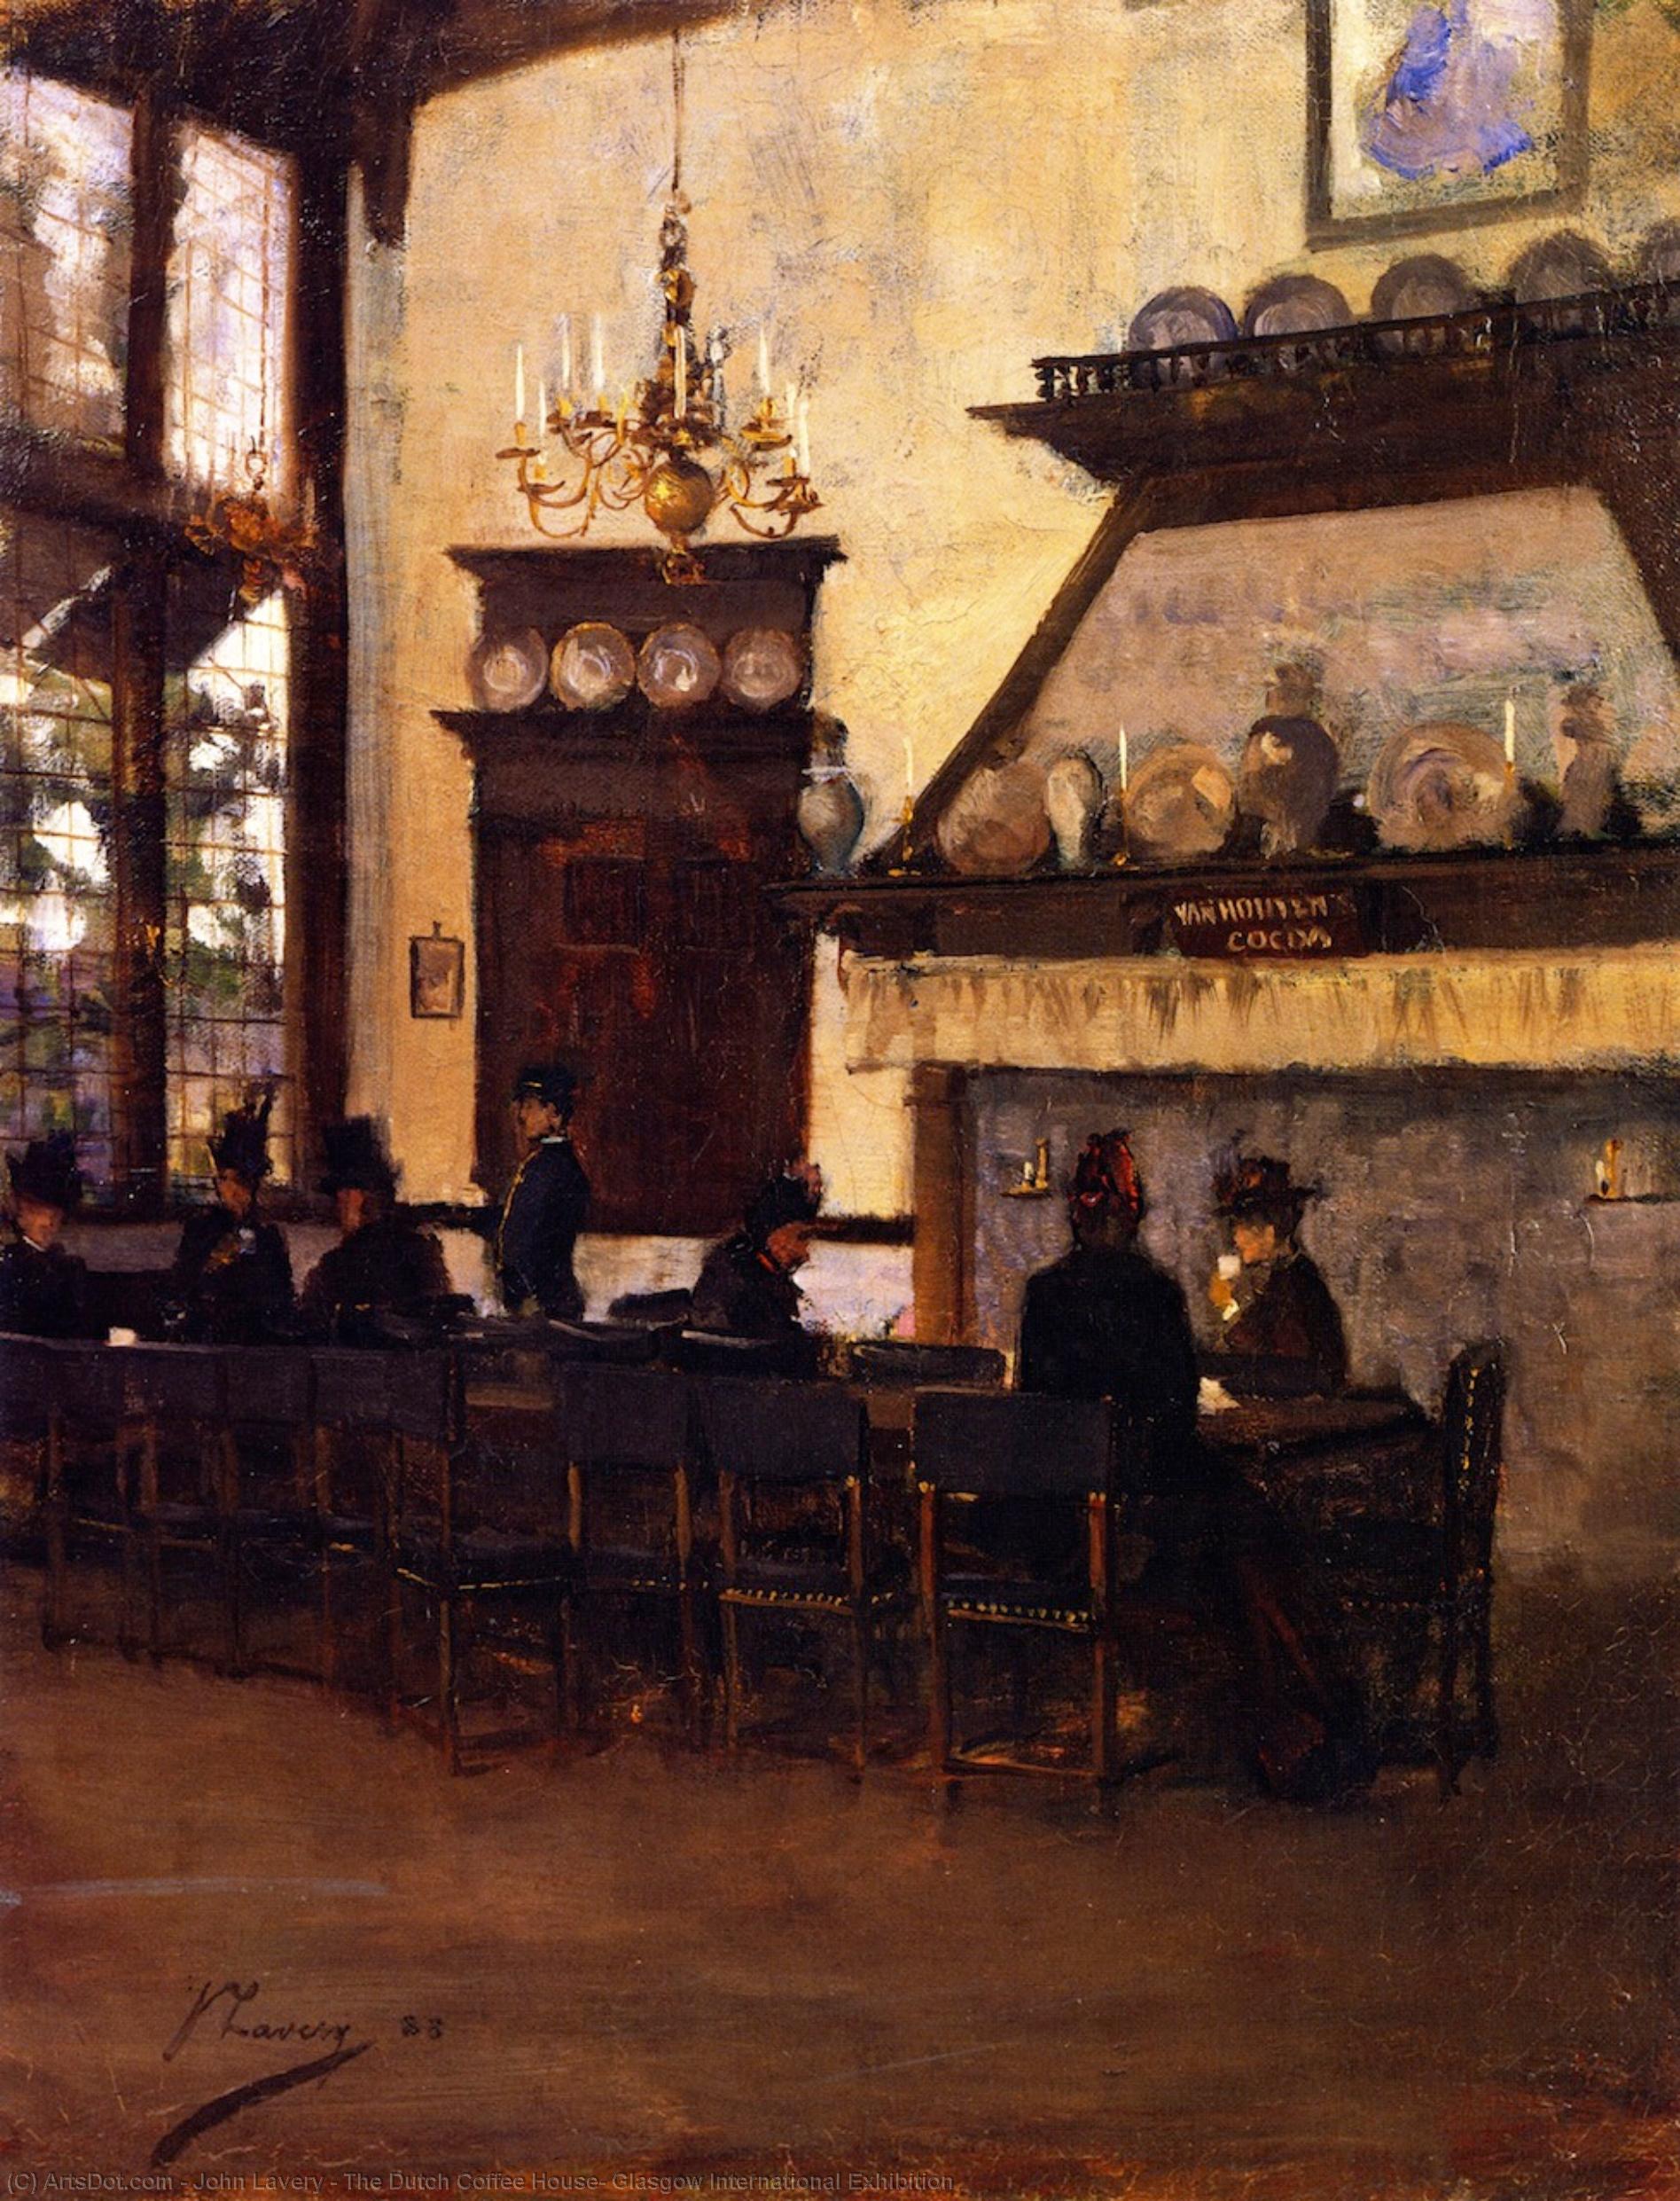 Order Oil Painting Replica The Dutch Coffee House, Glasgow International Exhibition, 1888 by John Lavery | ArtsDot.com